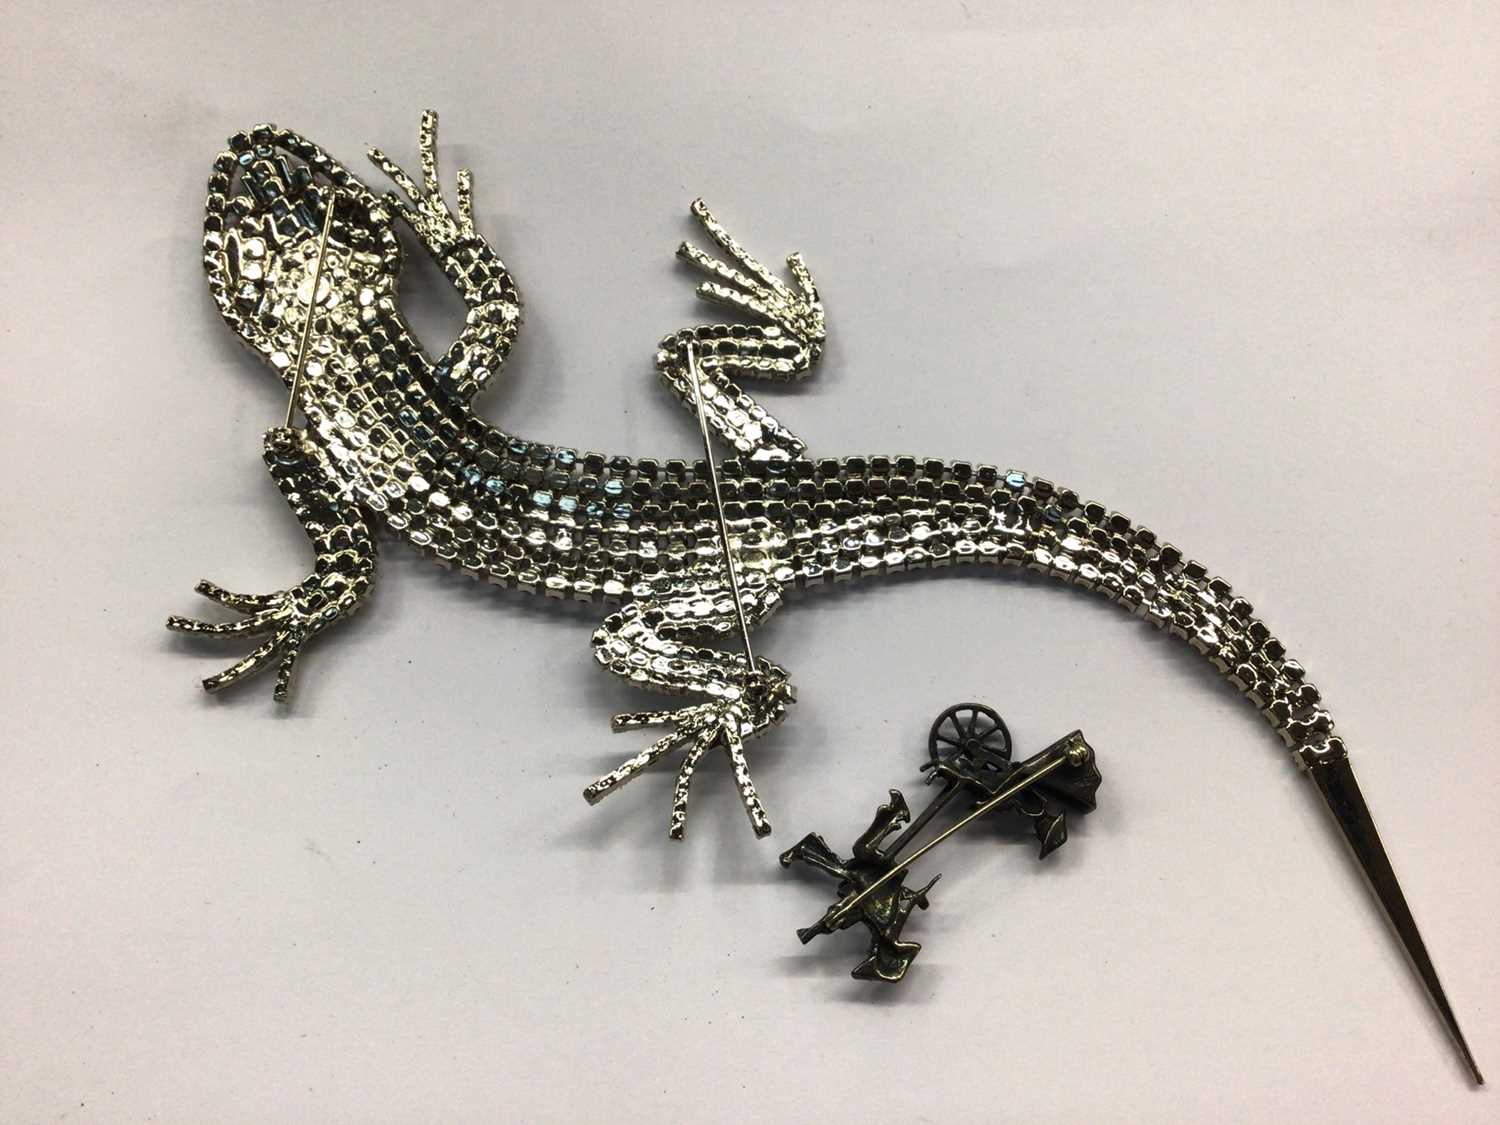 1980s Butler & Wilson paste set lizard brooch and silver Rickshaw brooch (2) - Image 2 of 3